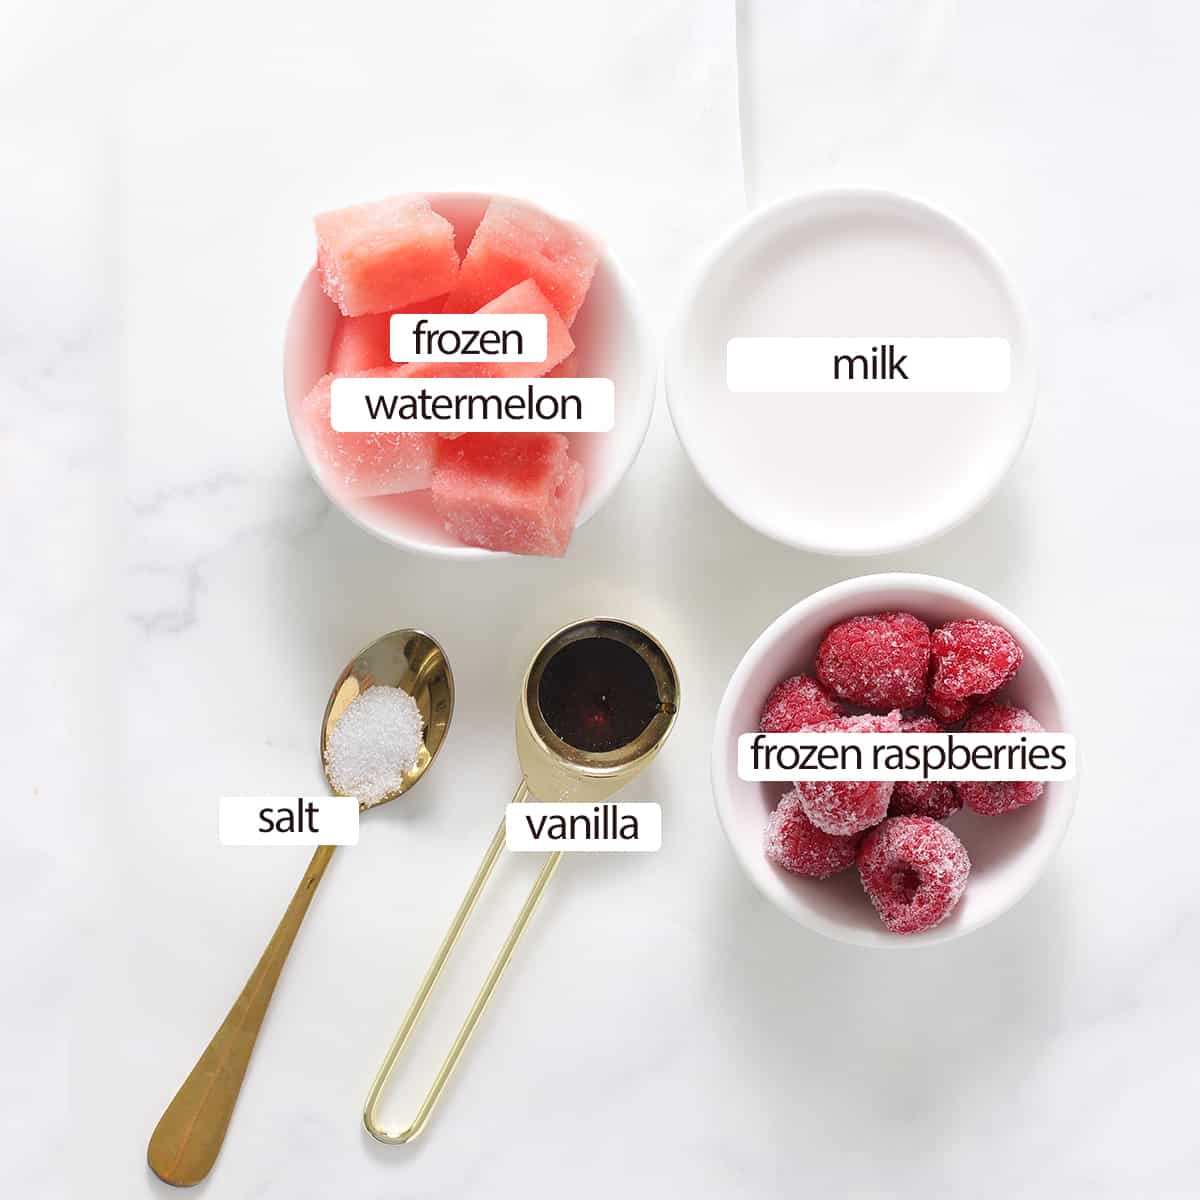 watermelon ice cream ingredients